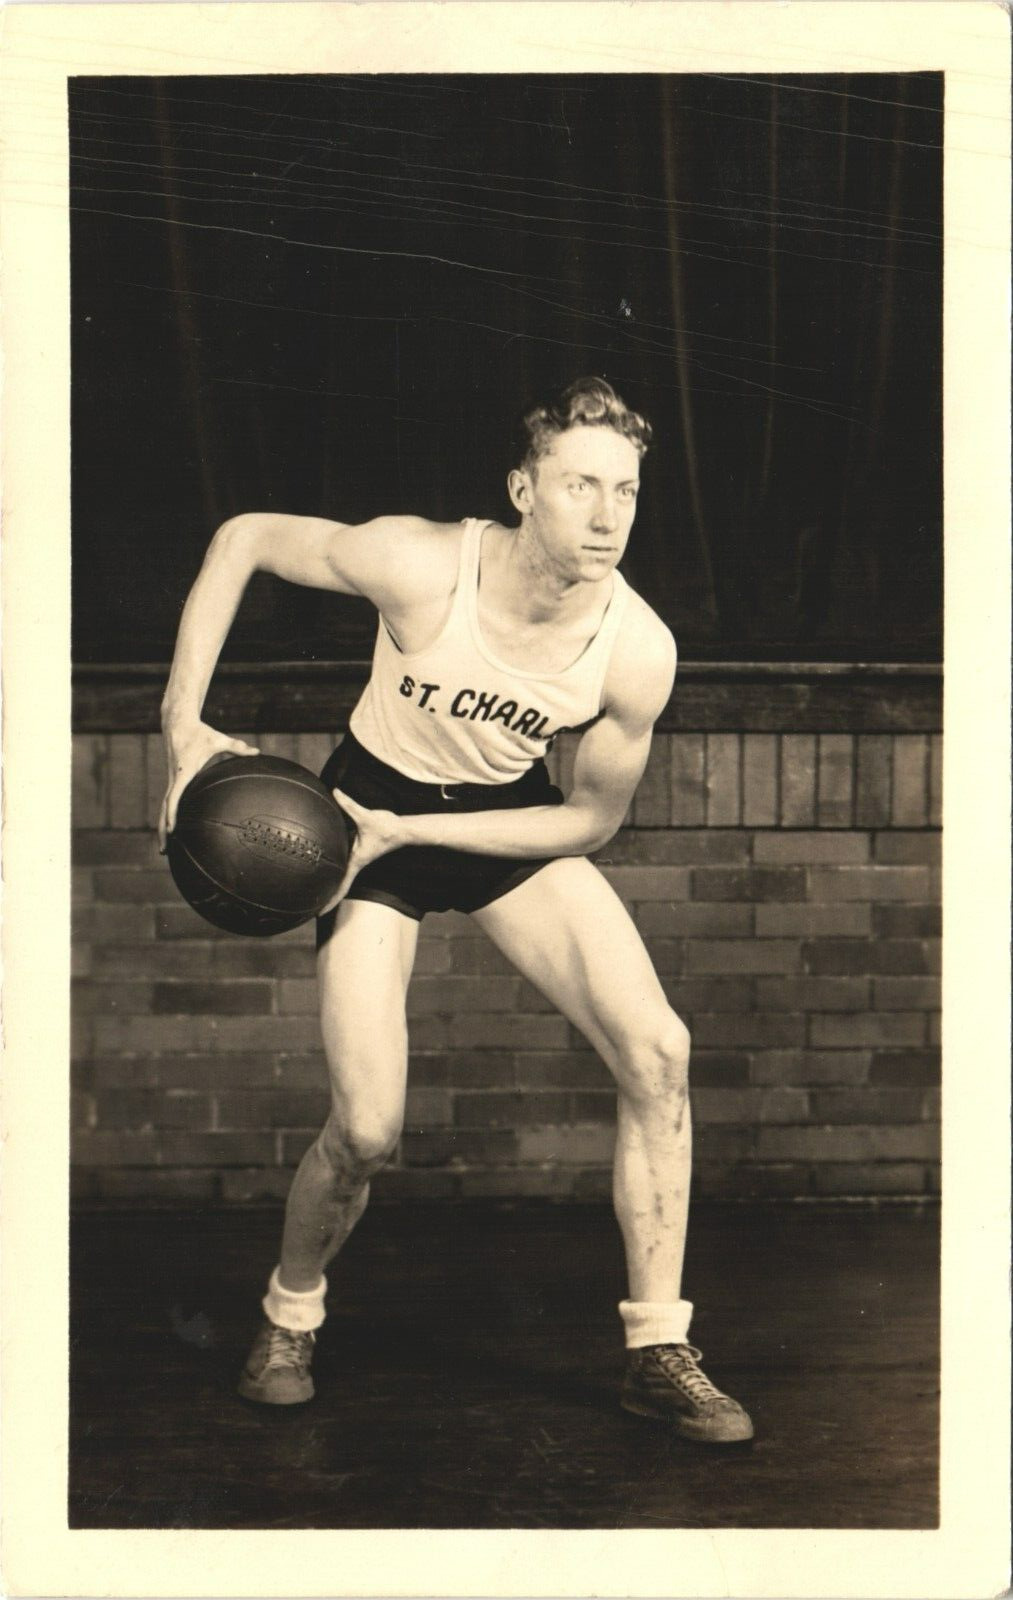 ST CHARLES BASKETBALL TEAM PLAYER vintage real photo postcard rppc ATHLETE c1950